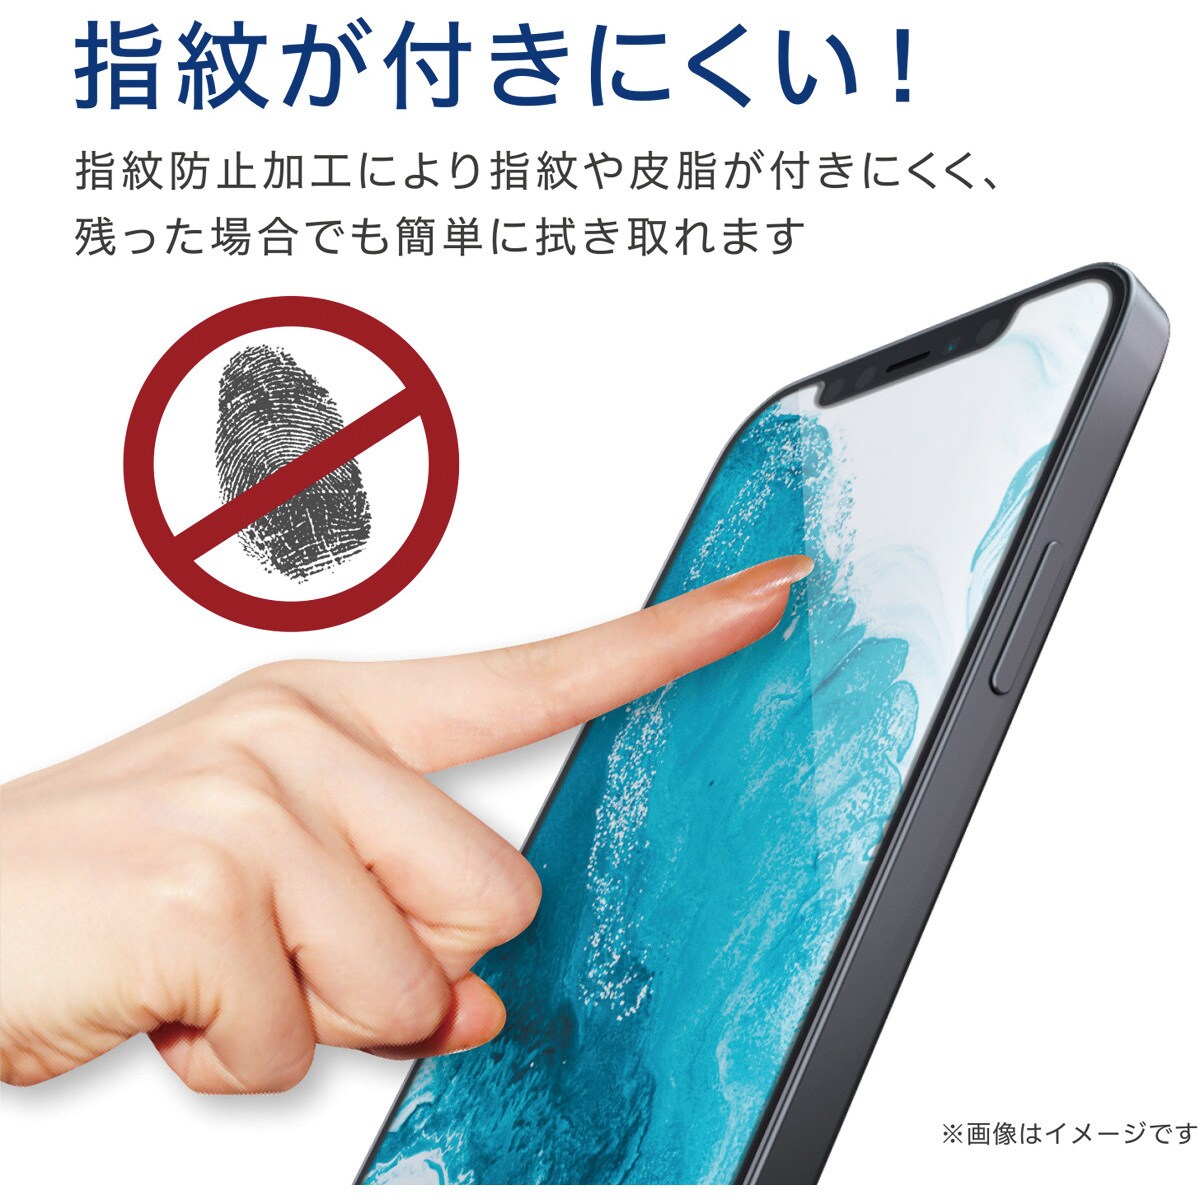 Pm K2flf Android One S8 フィルム 指紋防止 反射防止 1個 エレコム 通販サイトmonotaro